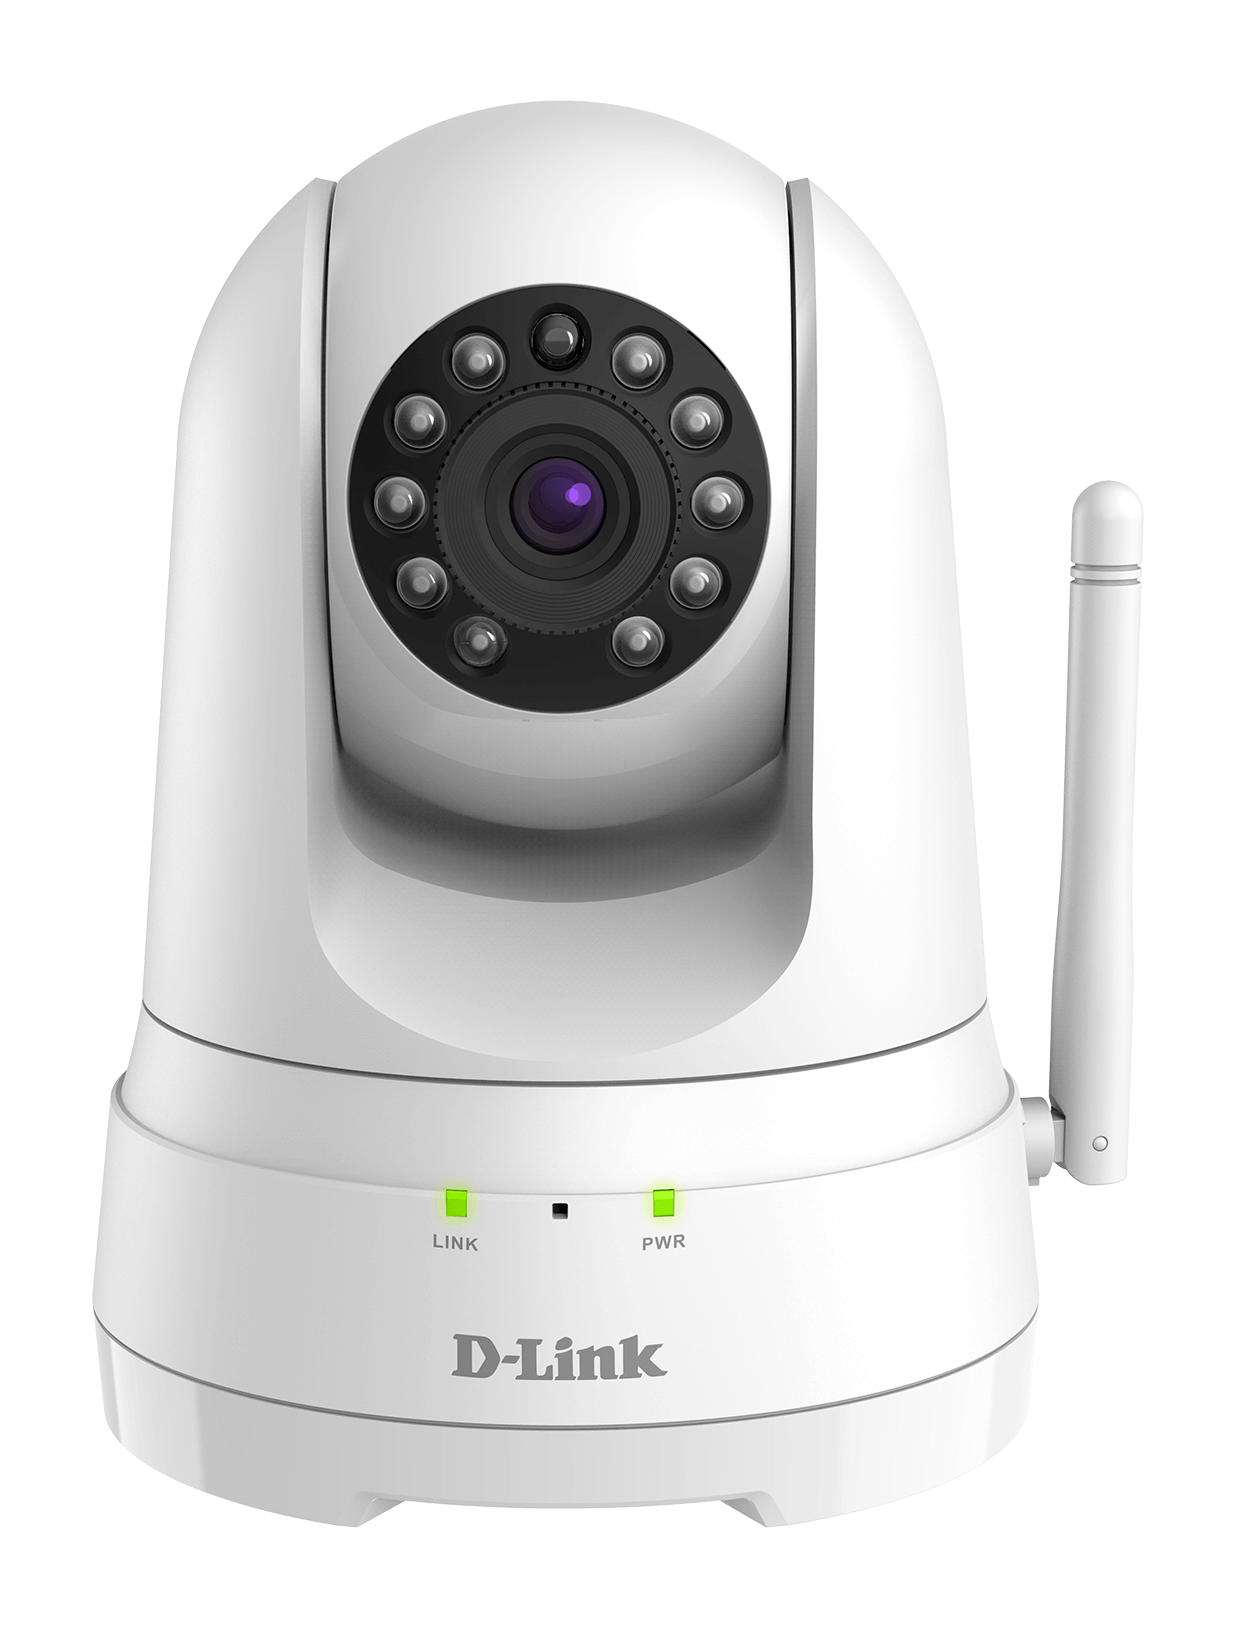 DCS-8525LH Full HD Pan & Tilt Wi-Fi Camera | D-Link UK